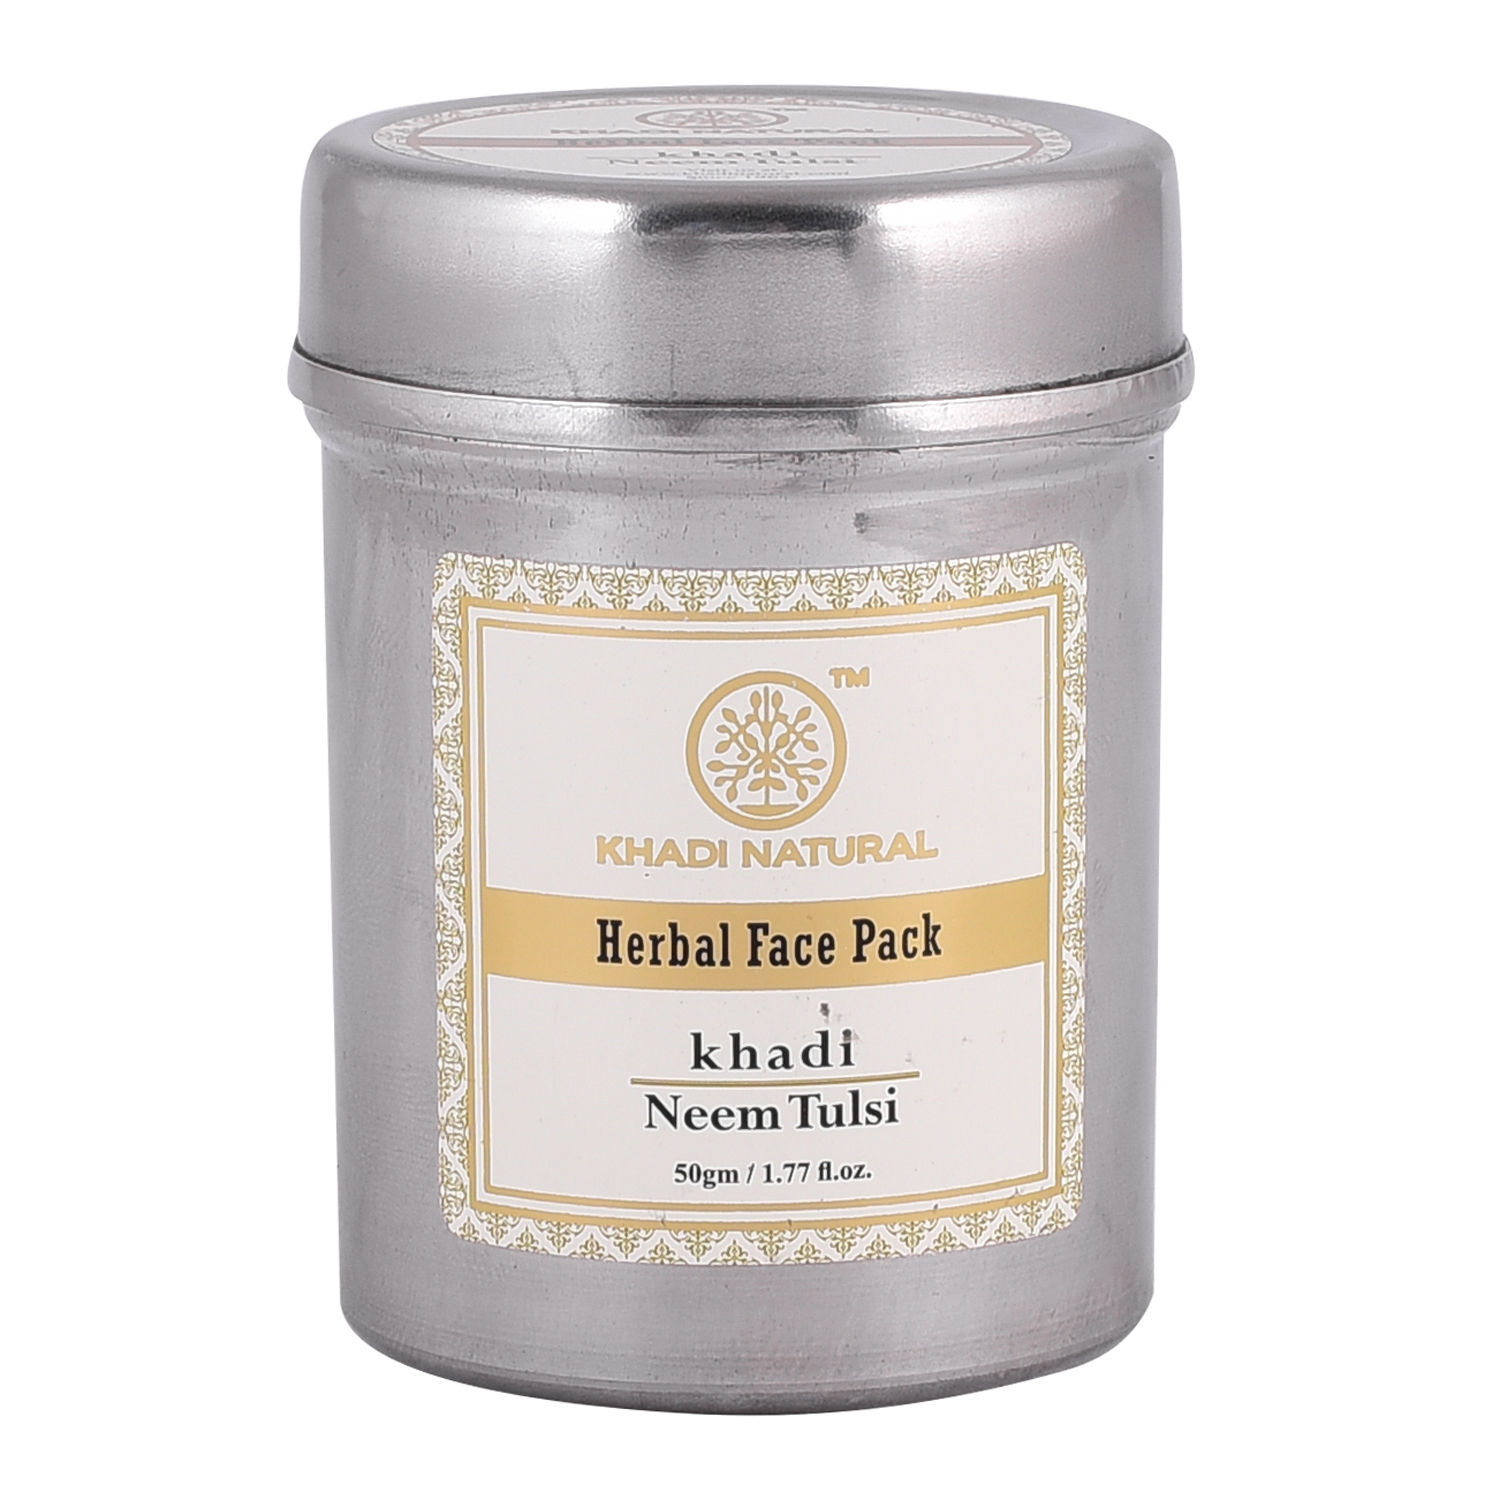 Khadi Natural Neem-Tulsi Herbal Face Pack Reduces Wrinkles & Finelines